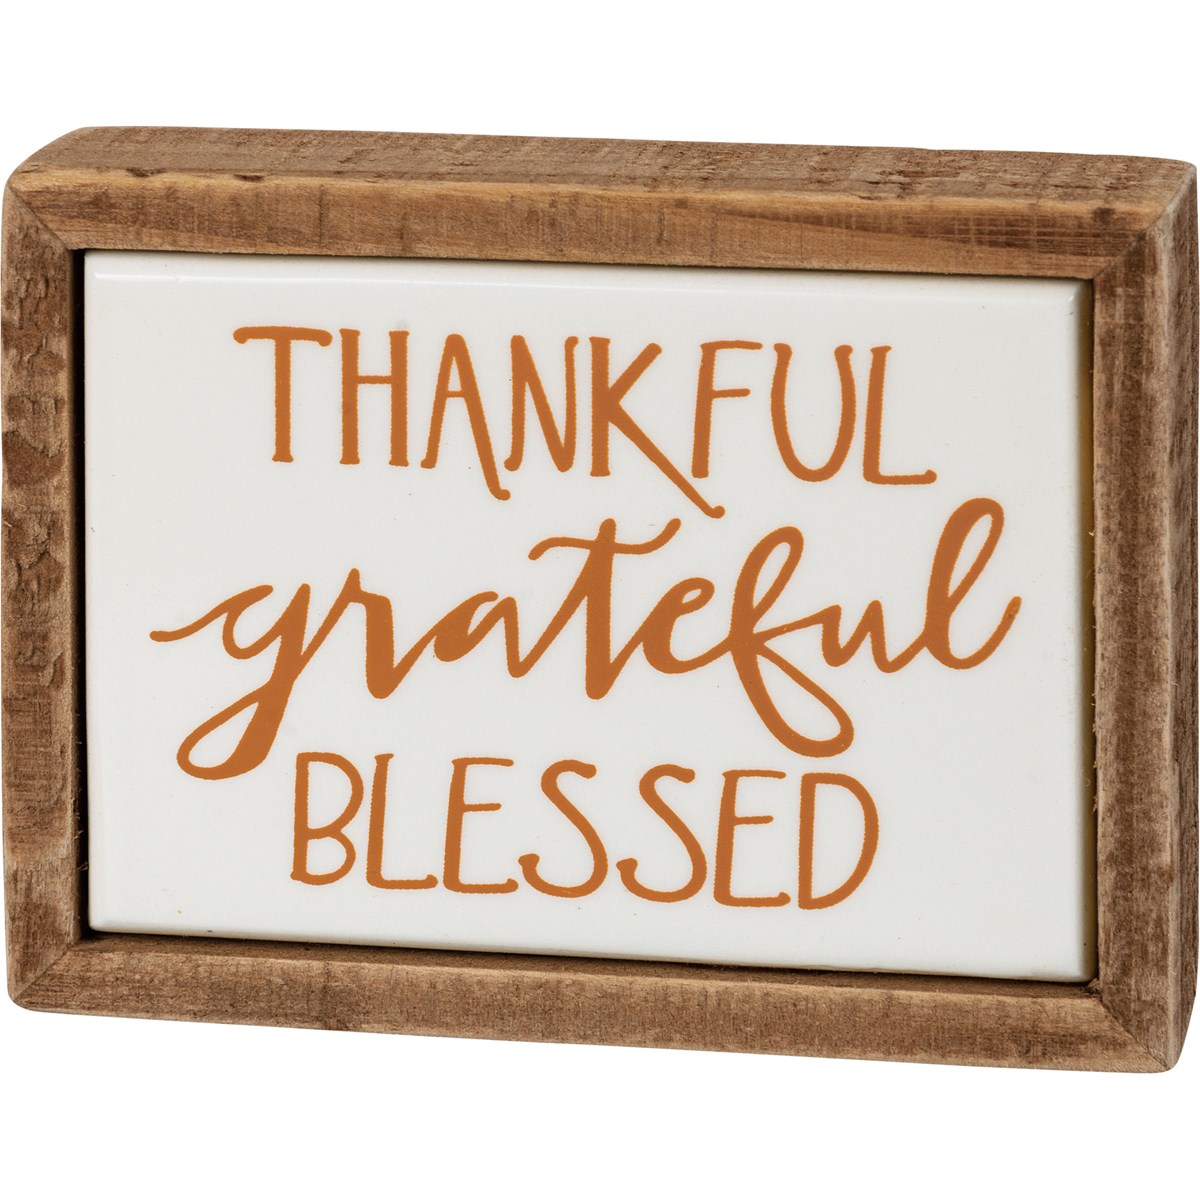 Thankful Grateful Blessed Box Sign Mini - Wood